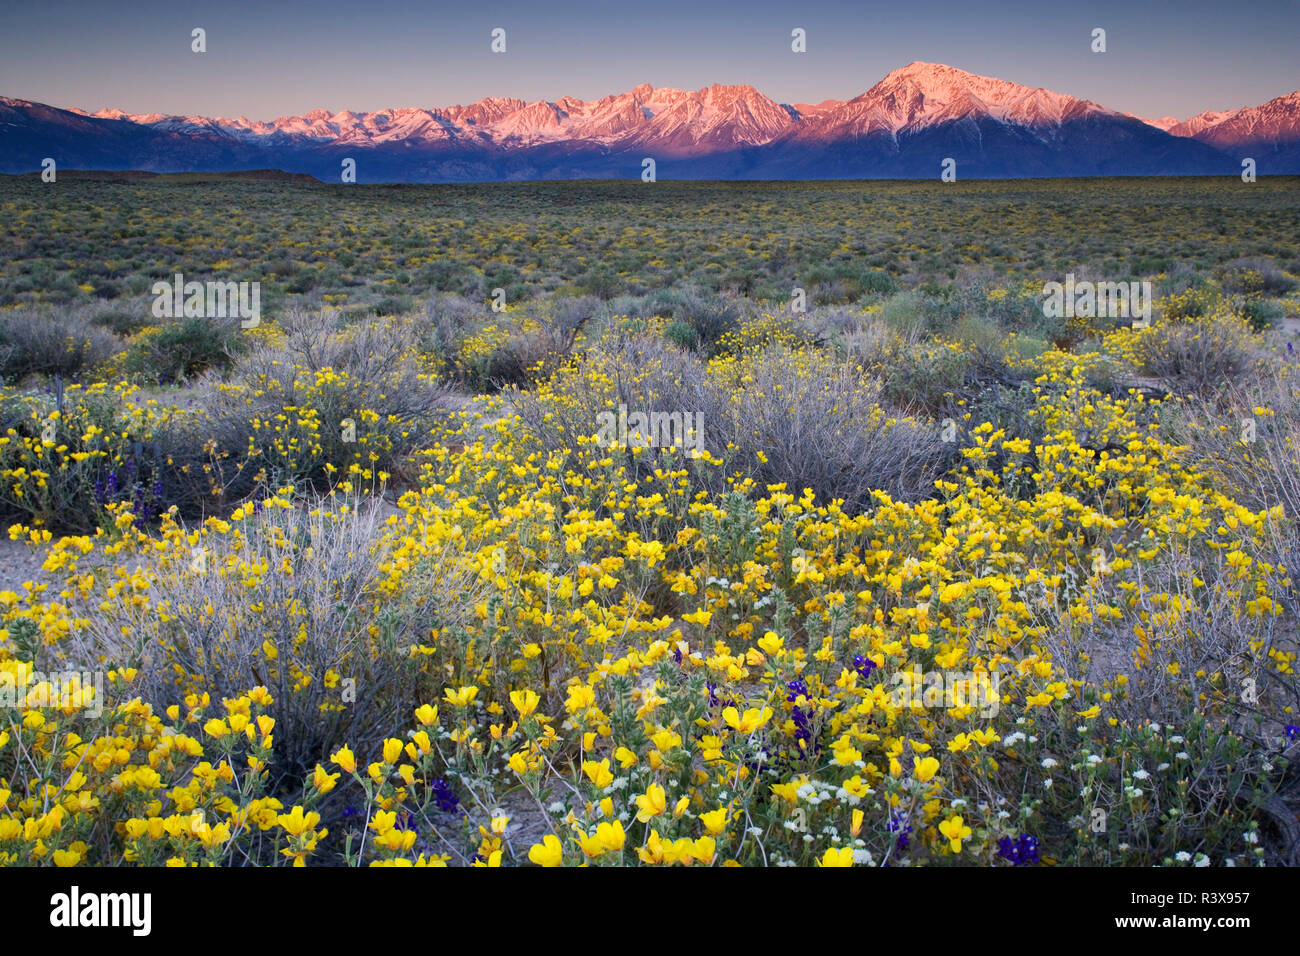 USA, California, Bishop. Venus blazing star flowers covering valley. Stock Photo